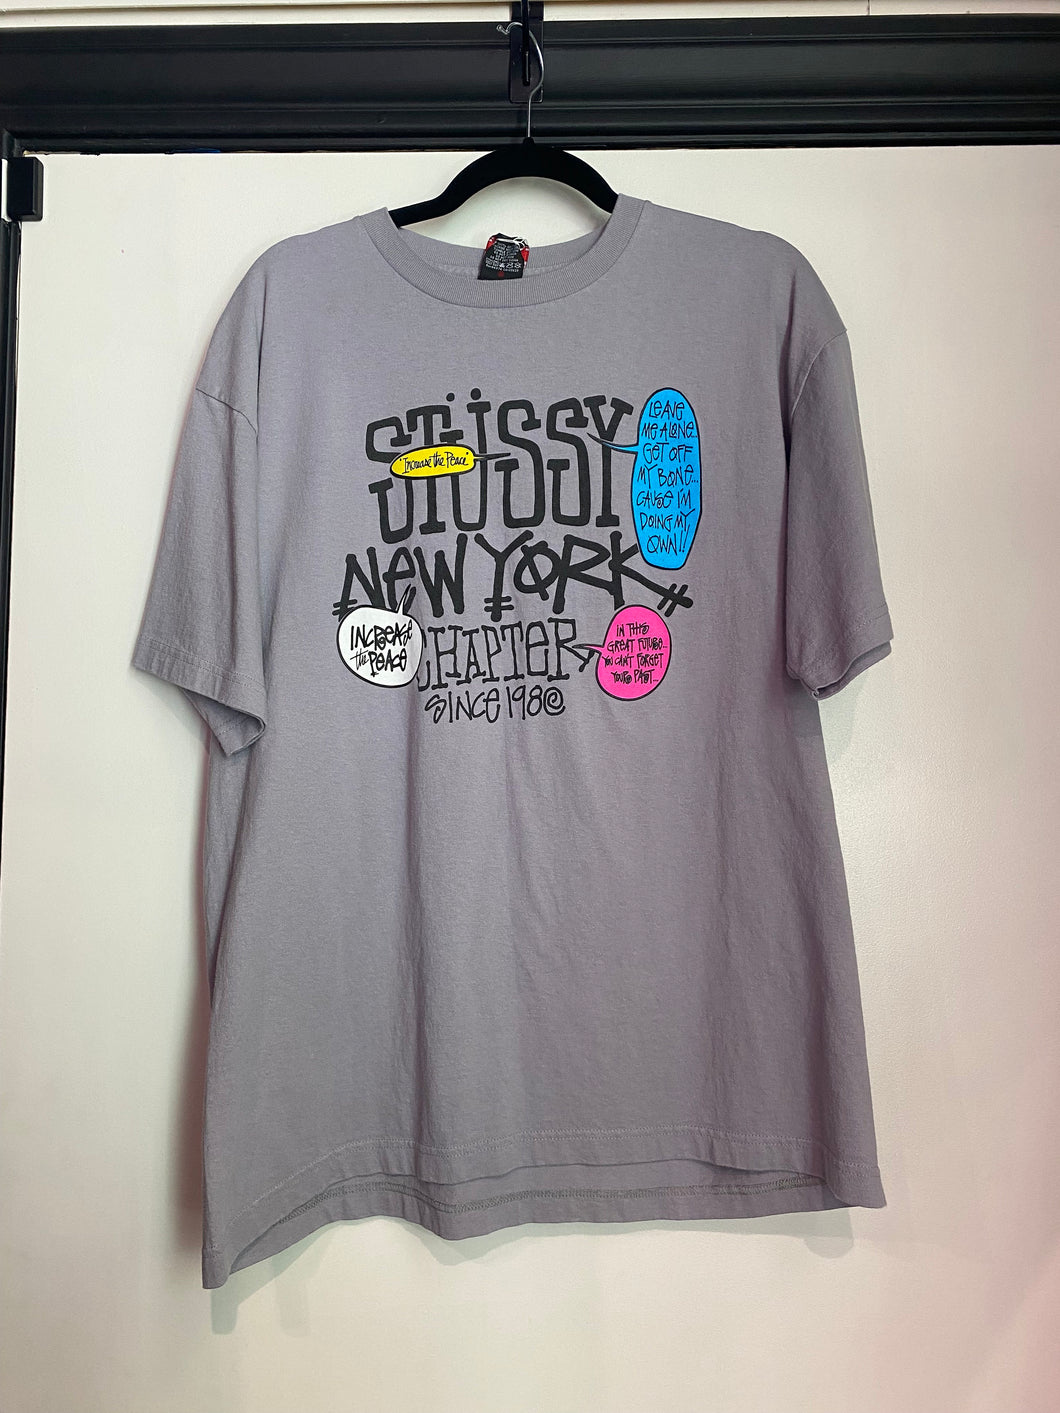 Vintage Gray Stüssy New York T-Shirt / 80s 90s 2000s Graphic Tee